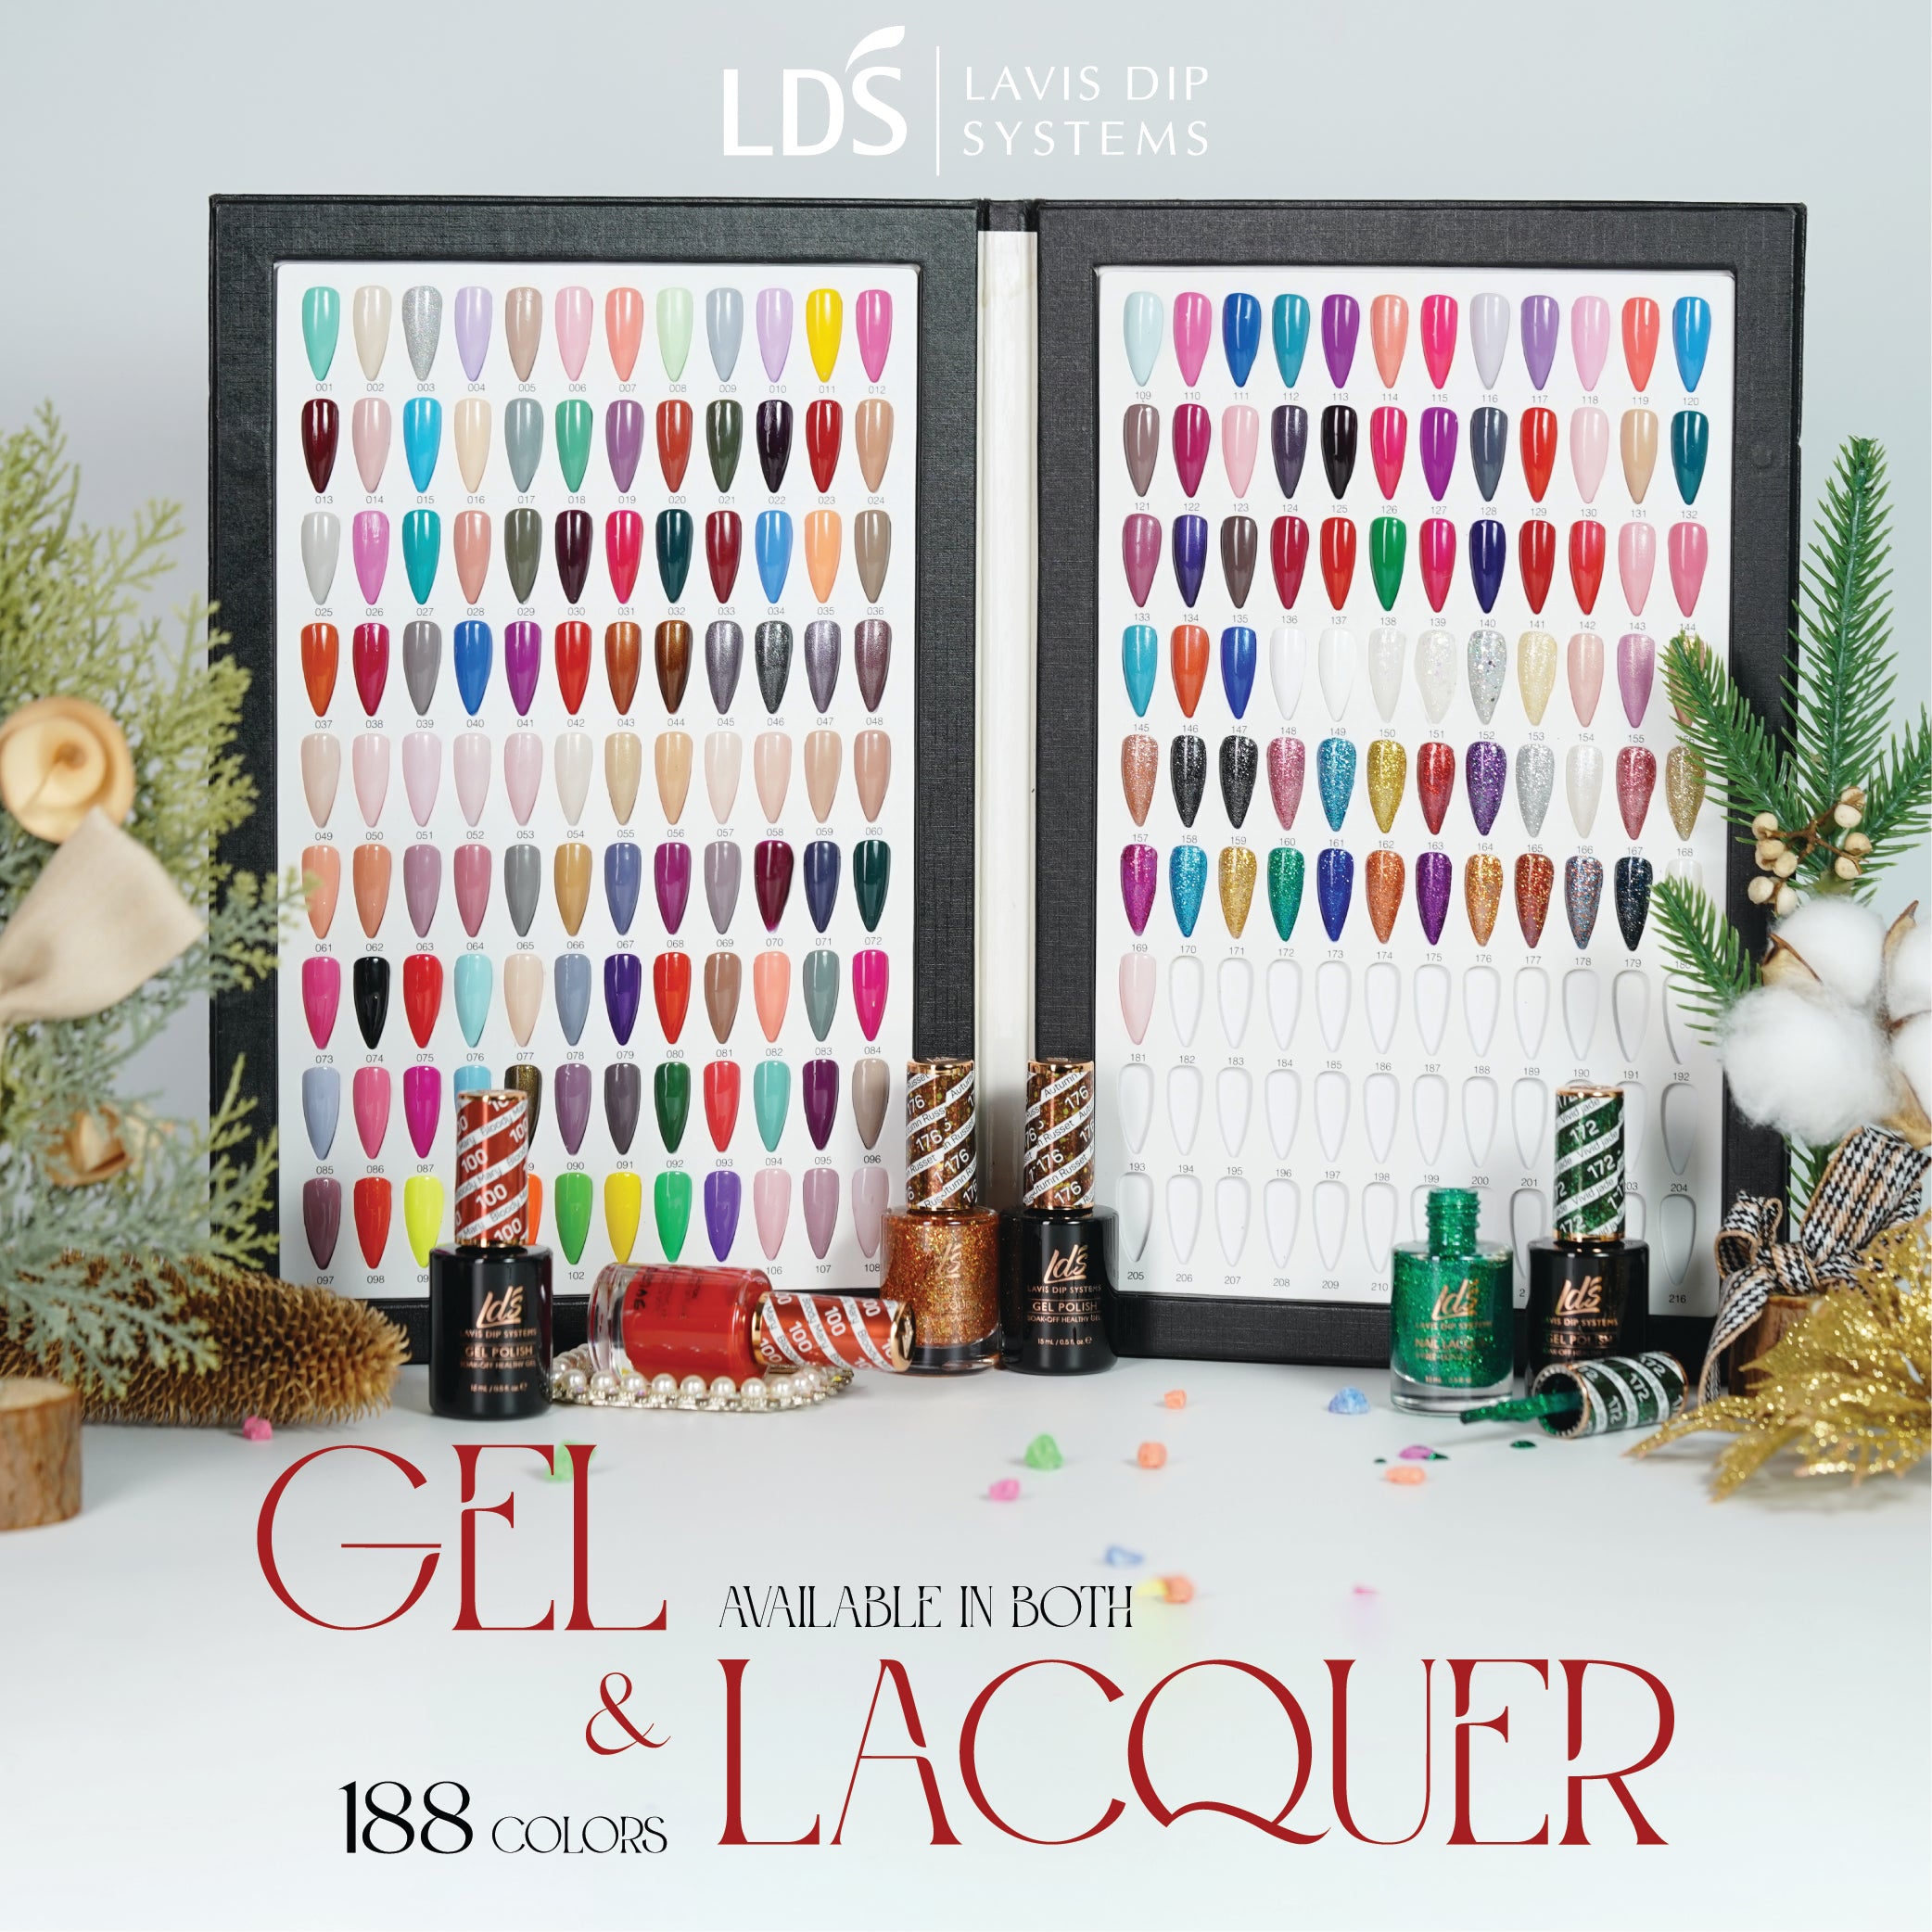 LDS Gel Nail Polish Duo - 168 Glitter, Gold Colors - Let Me Explain